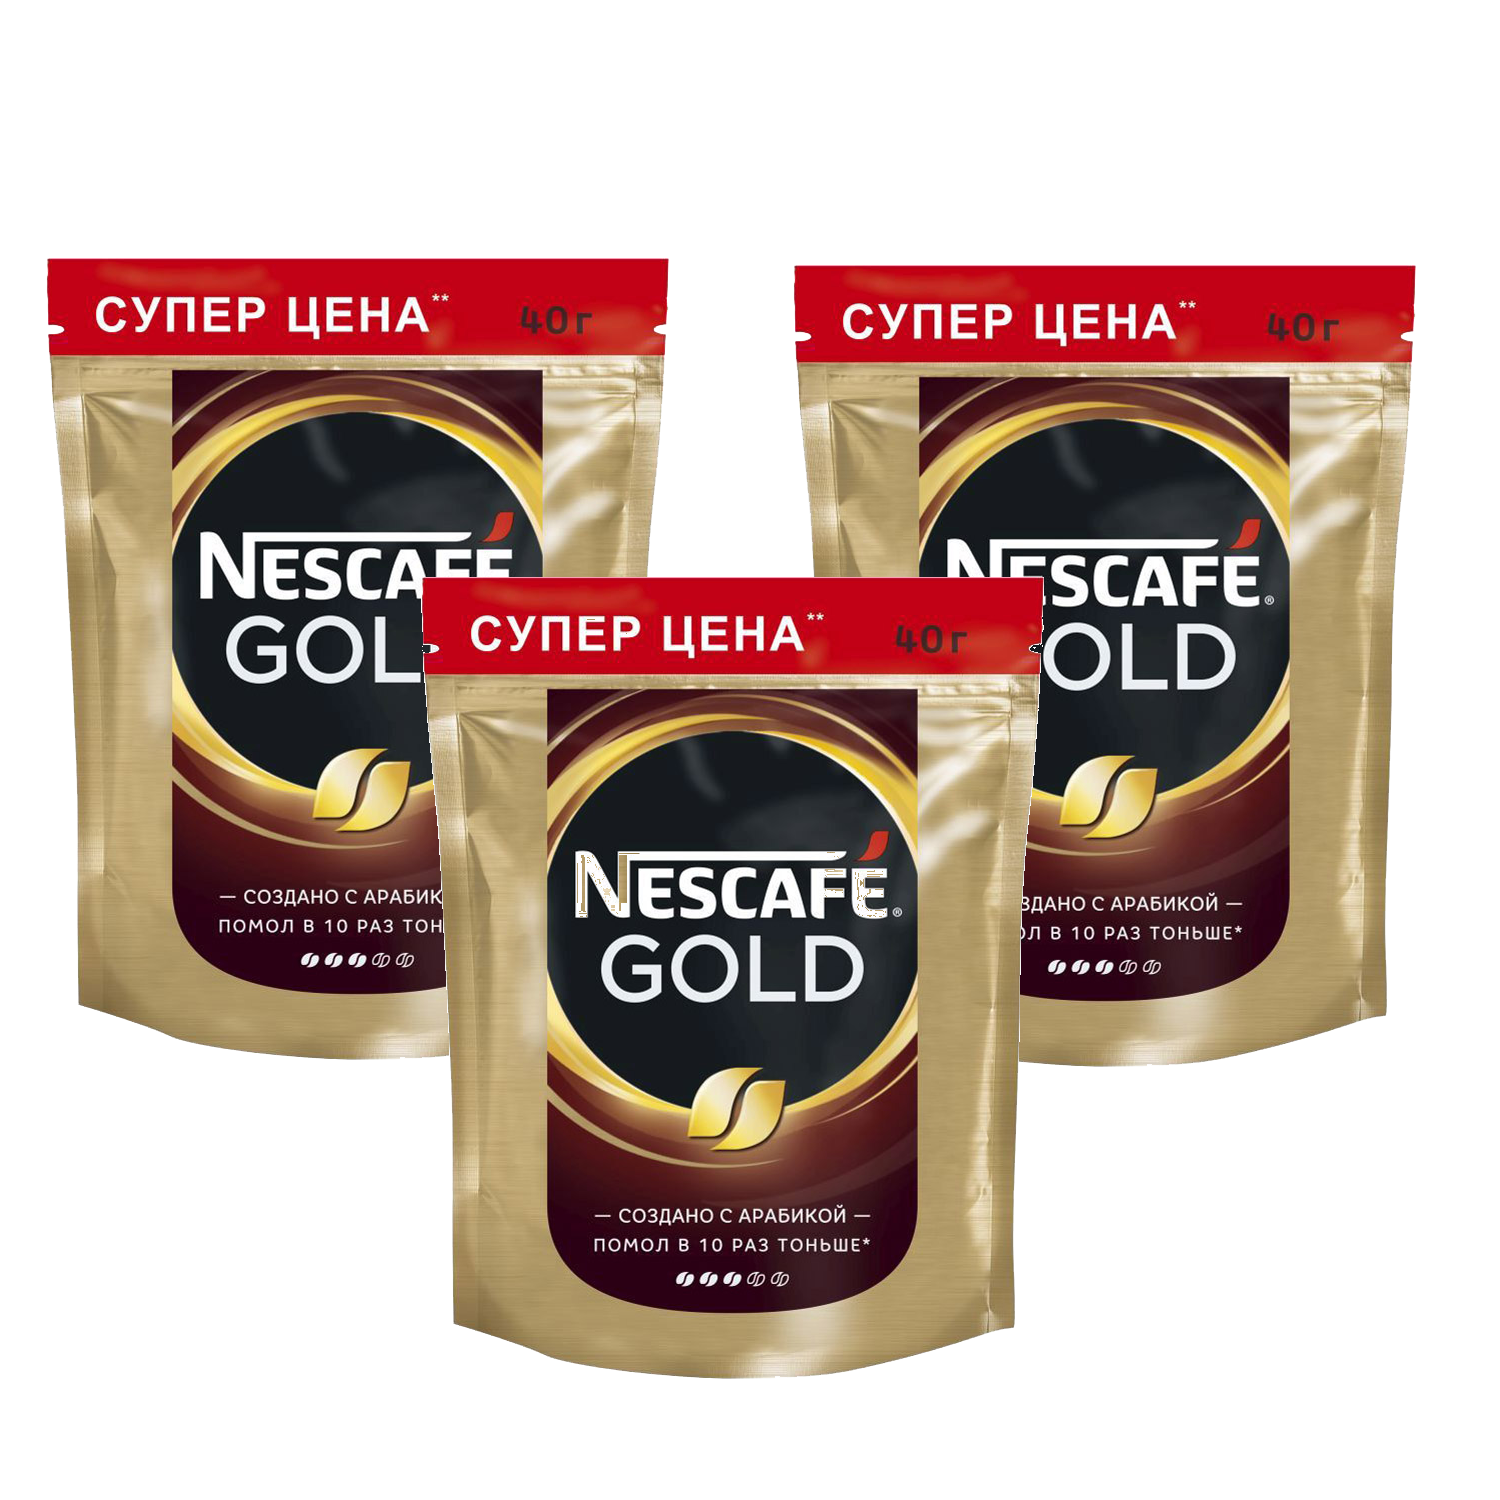 Nescafe gold пакет. Кофе Нескафе Голд 40 г. Нескафе Голд в пакете. Нескафе Голд 190 г мягкая упаковка. Нескафе Голд в пакетиках.